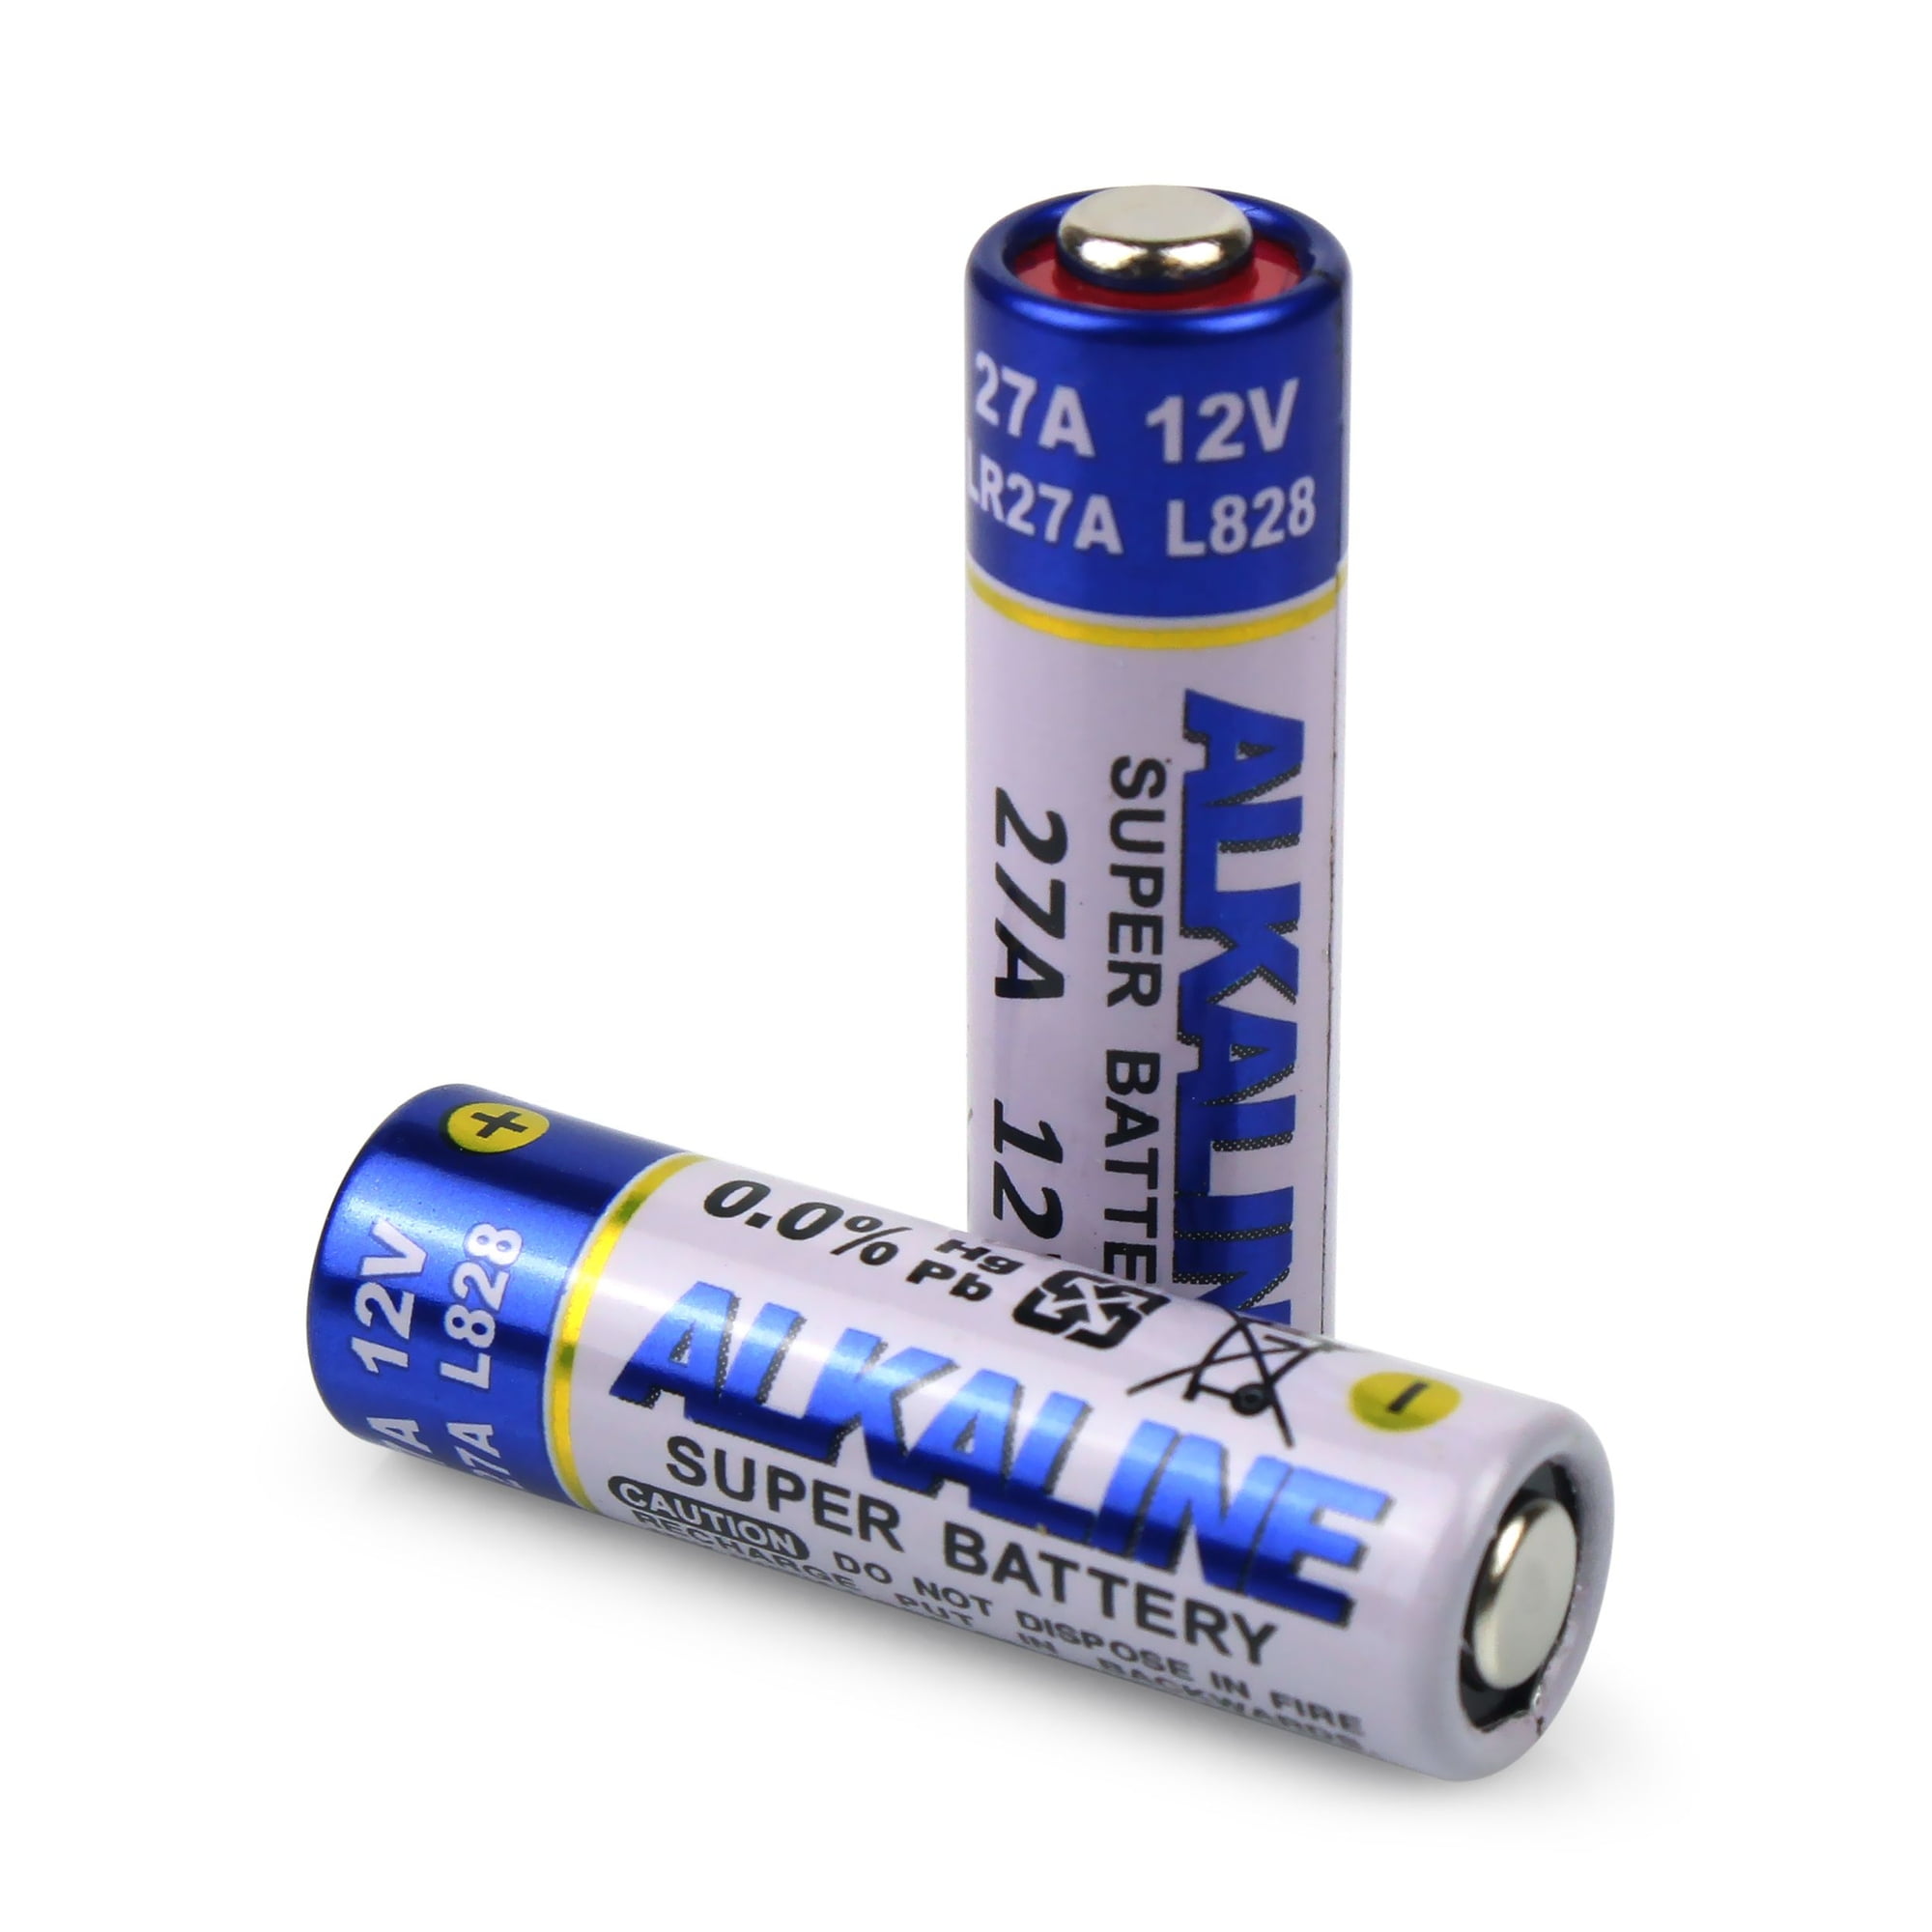 Toshiba 27A 12V Alkaline Battery 27A A27BP G27A GP27A L828 MN27 (2  Batteries)